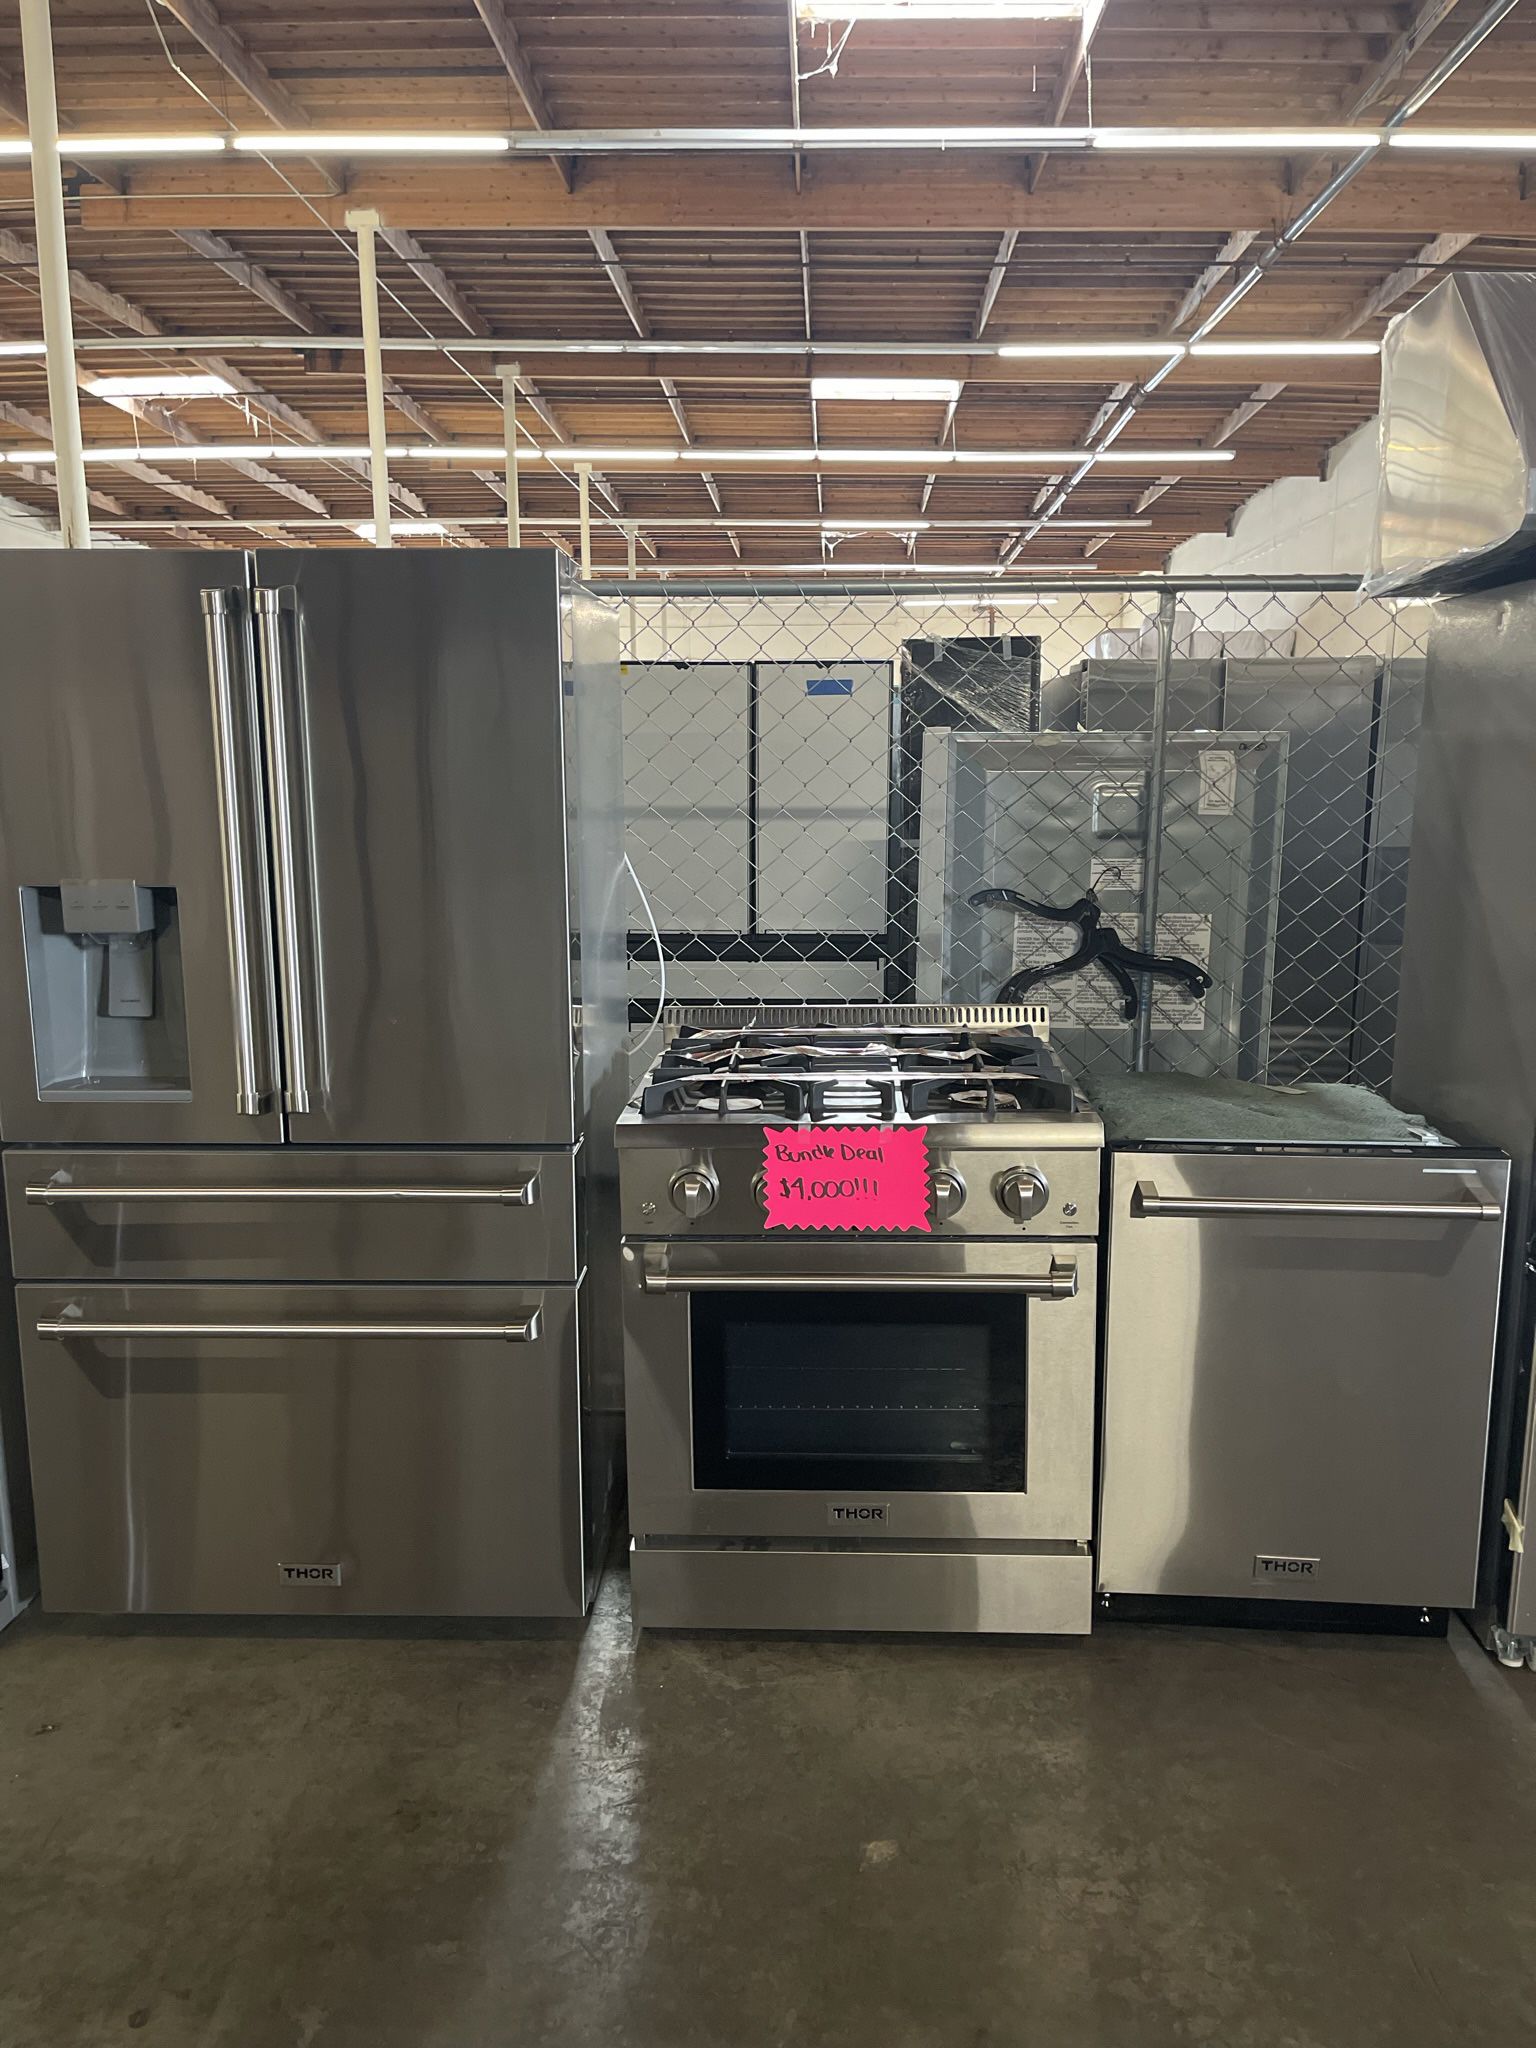 THOR appliance kitchen set bundle deal